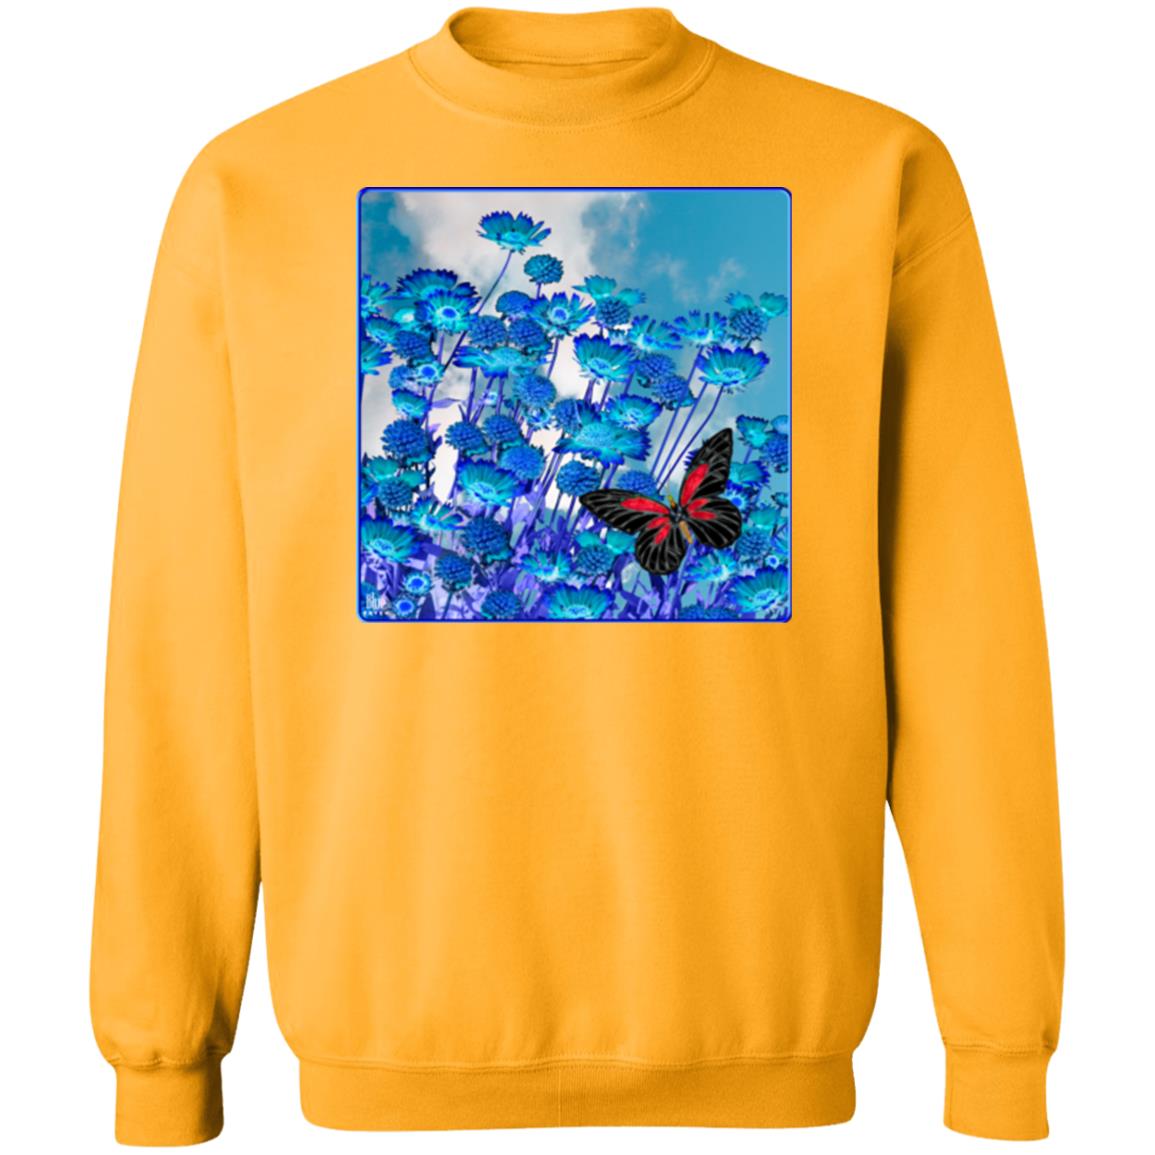 Blue Daisies - Unisex Crew Neck Sweatshirt